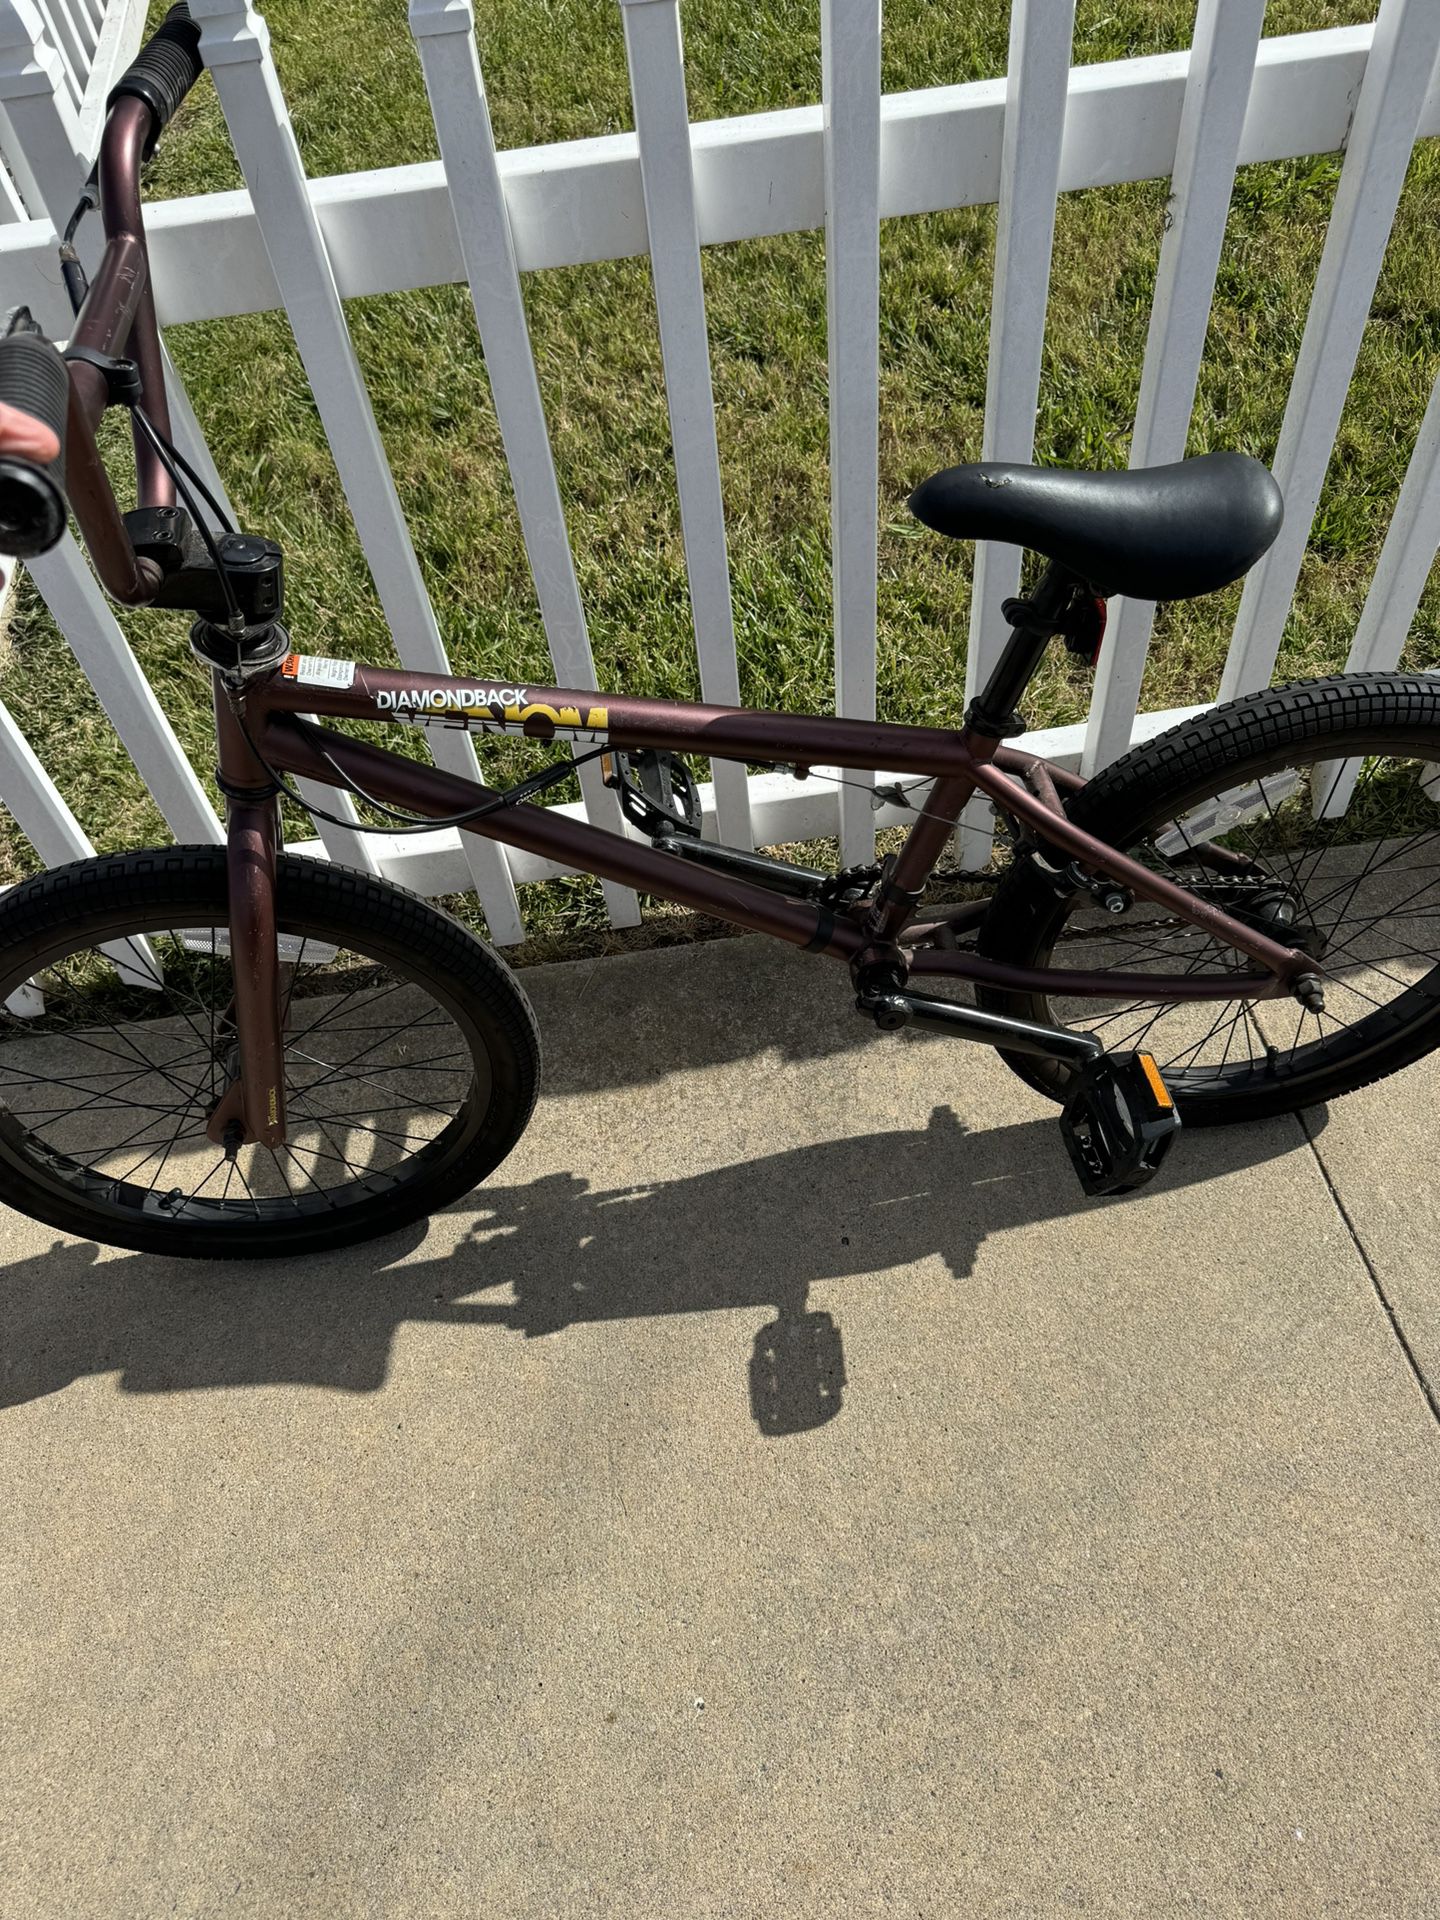 BMX Bicycle (Bike)